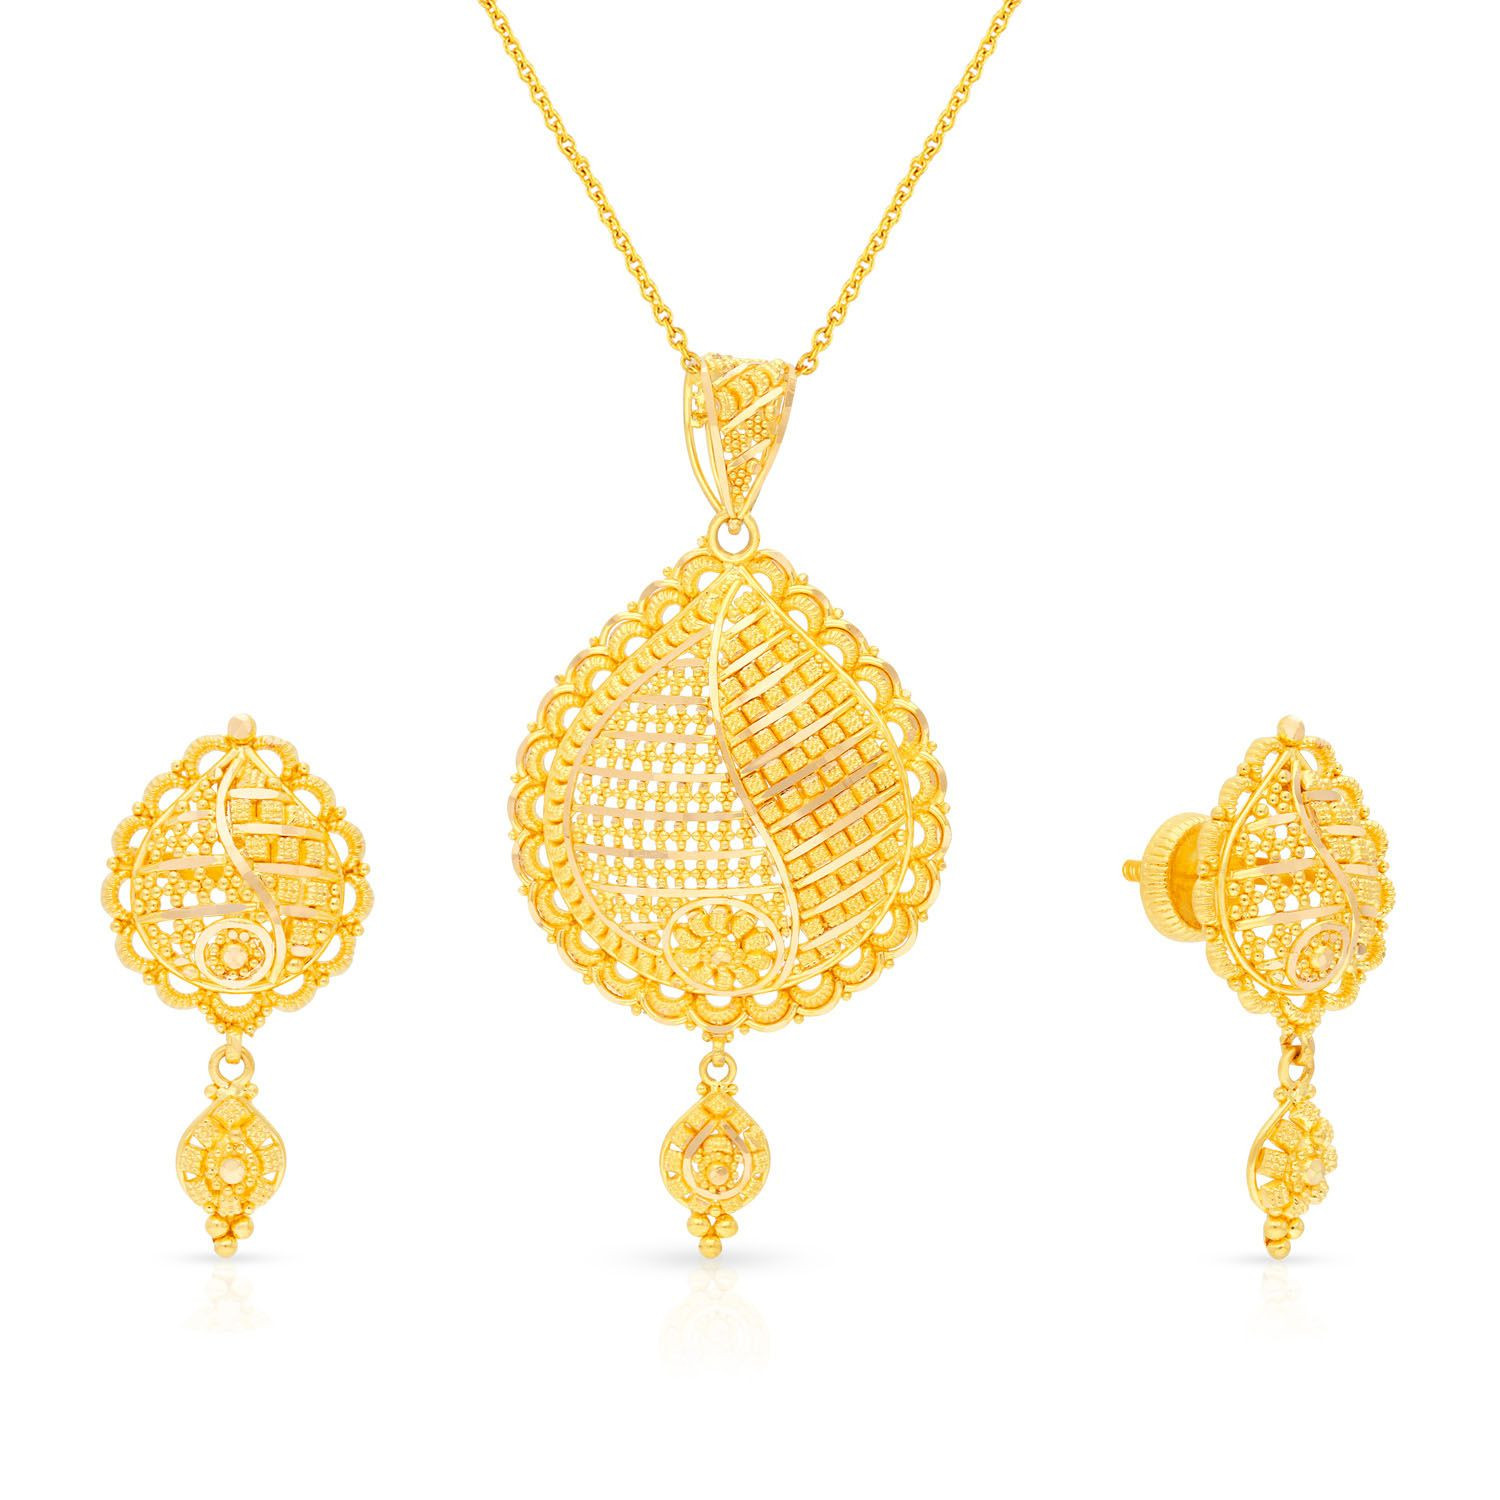 Trisha aabi jewels 22ct bis hallmark Pendant Set for woman